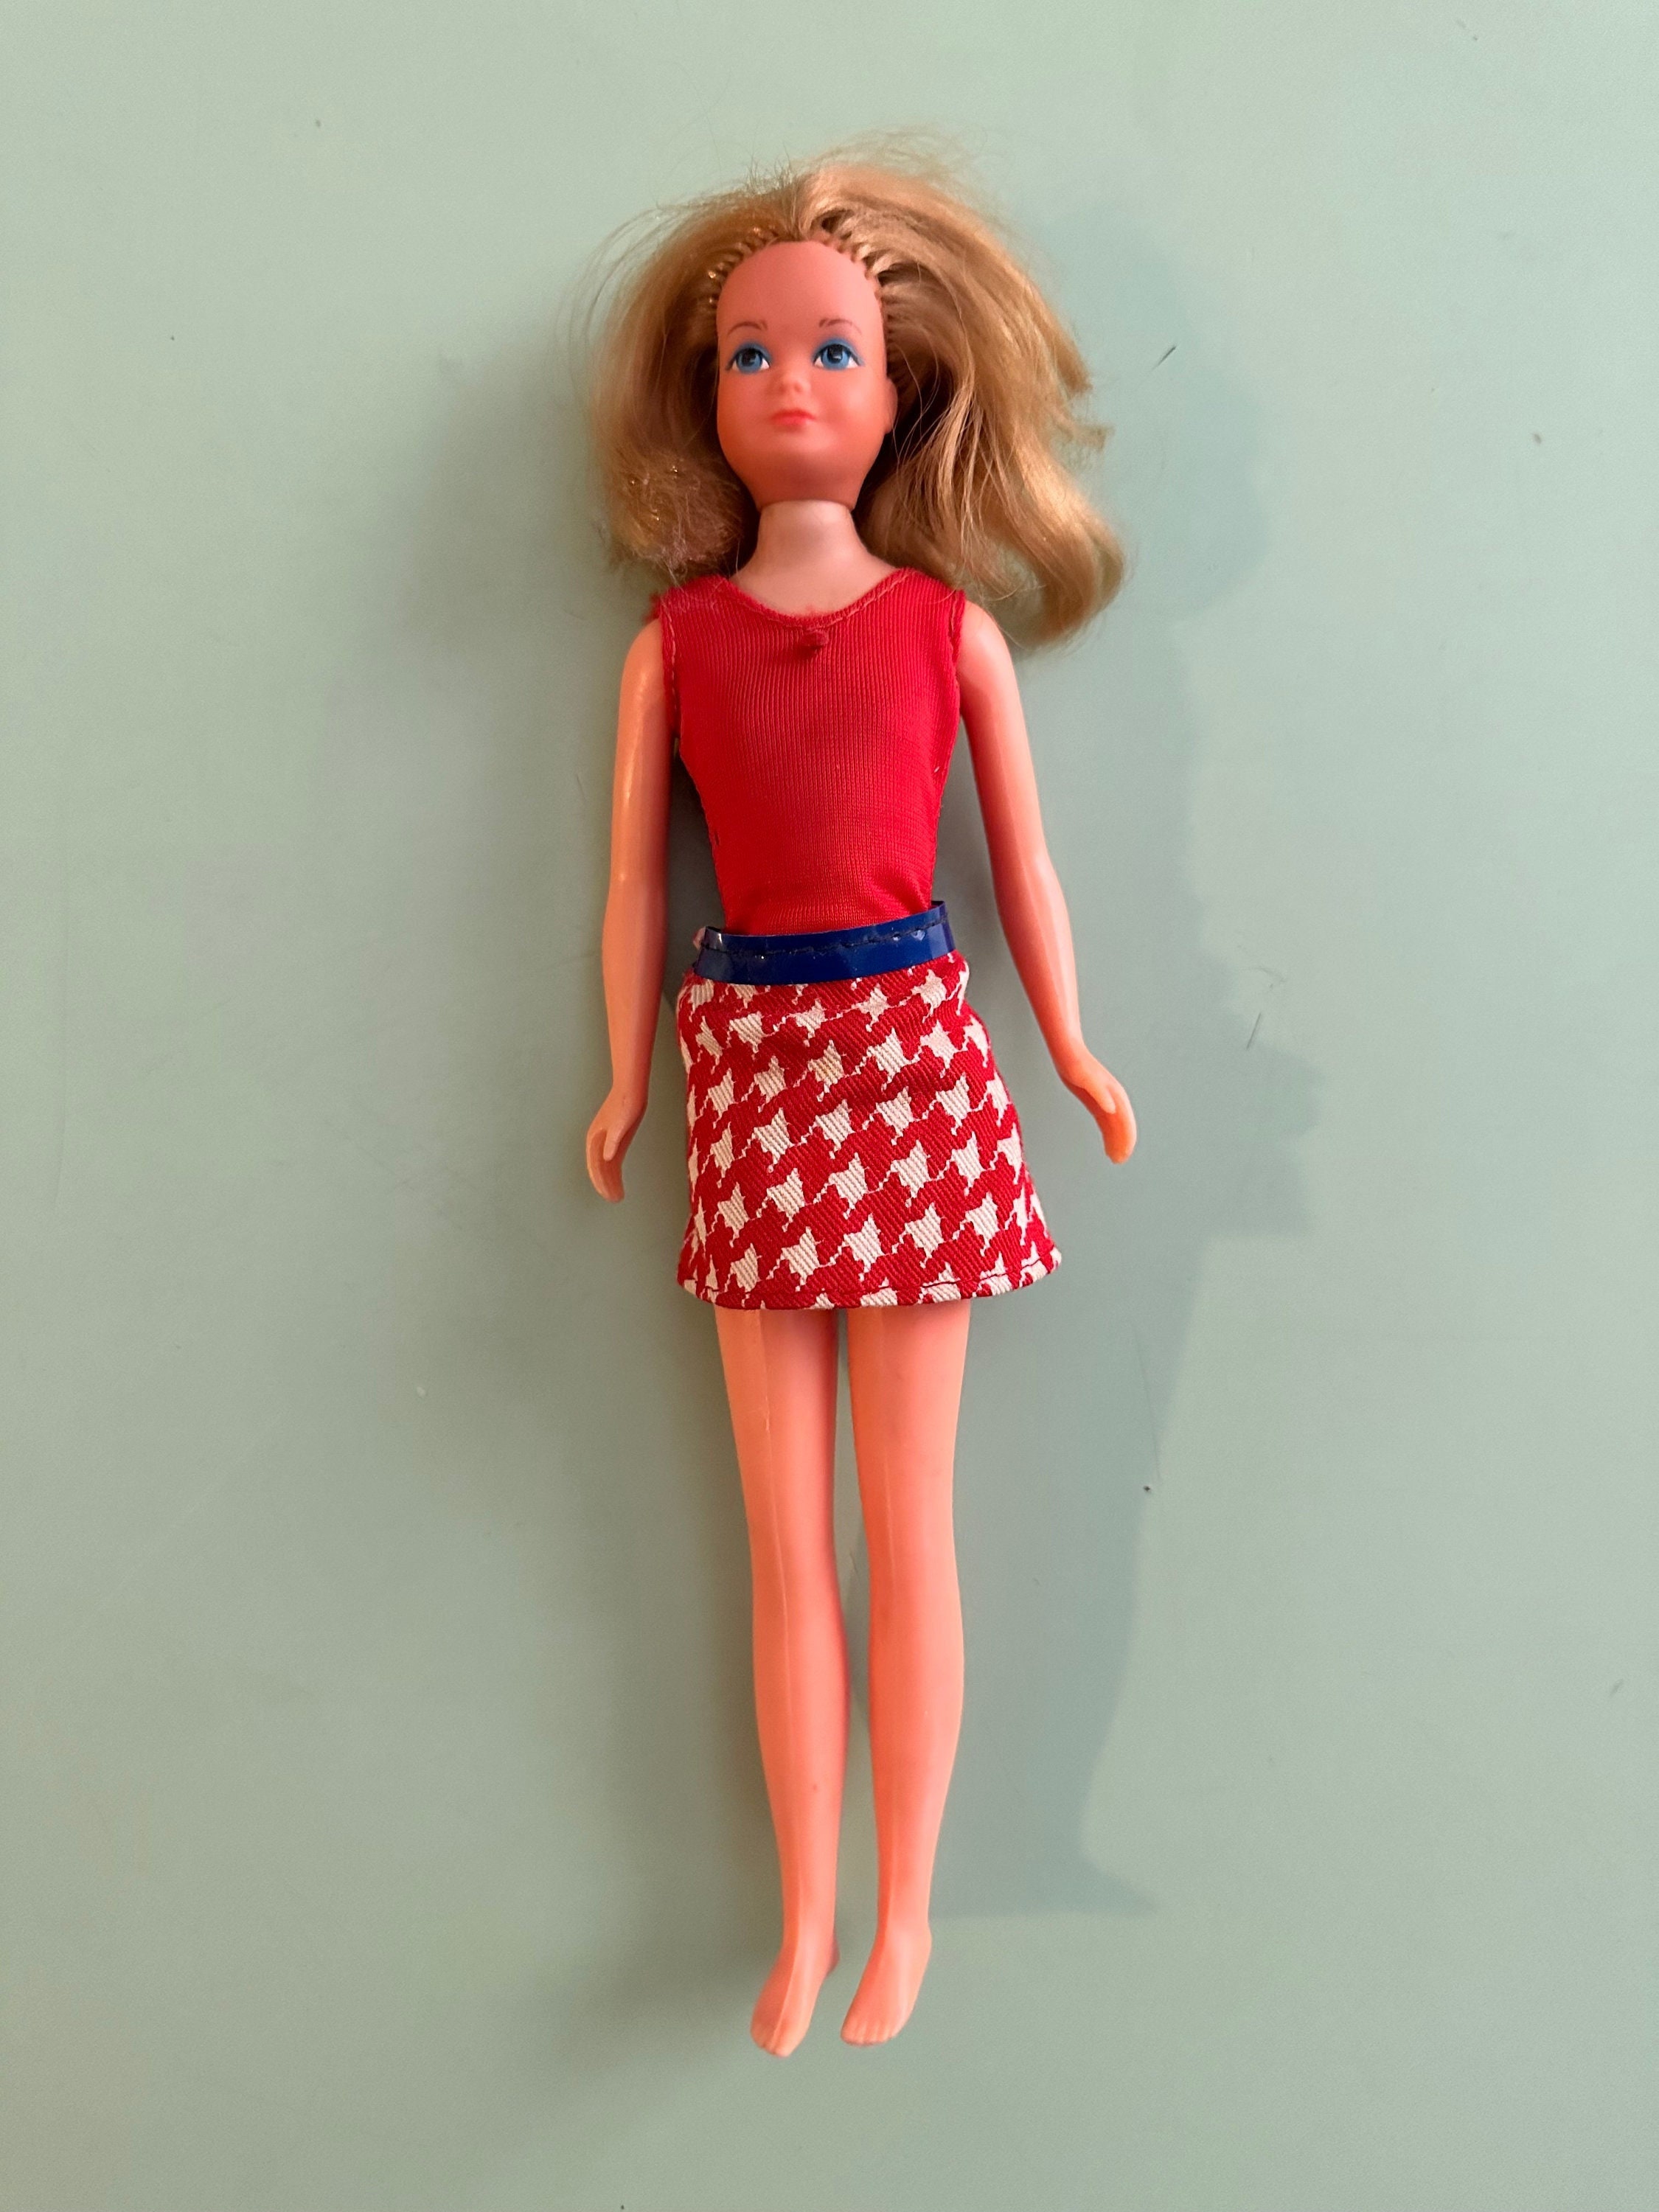 Mattel Vintage 70's Barbie Growing Up Skipper